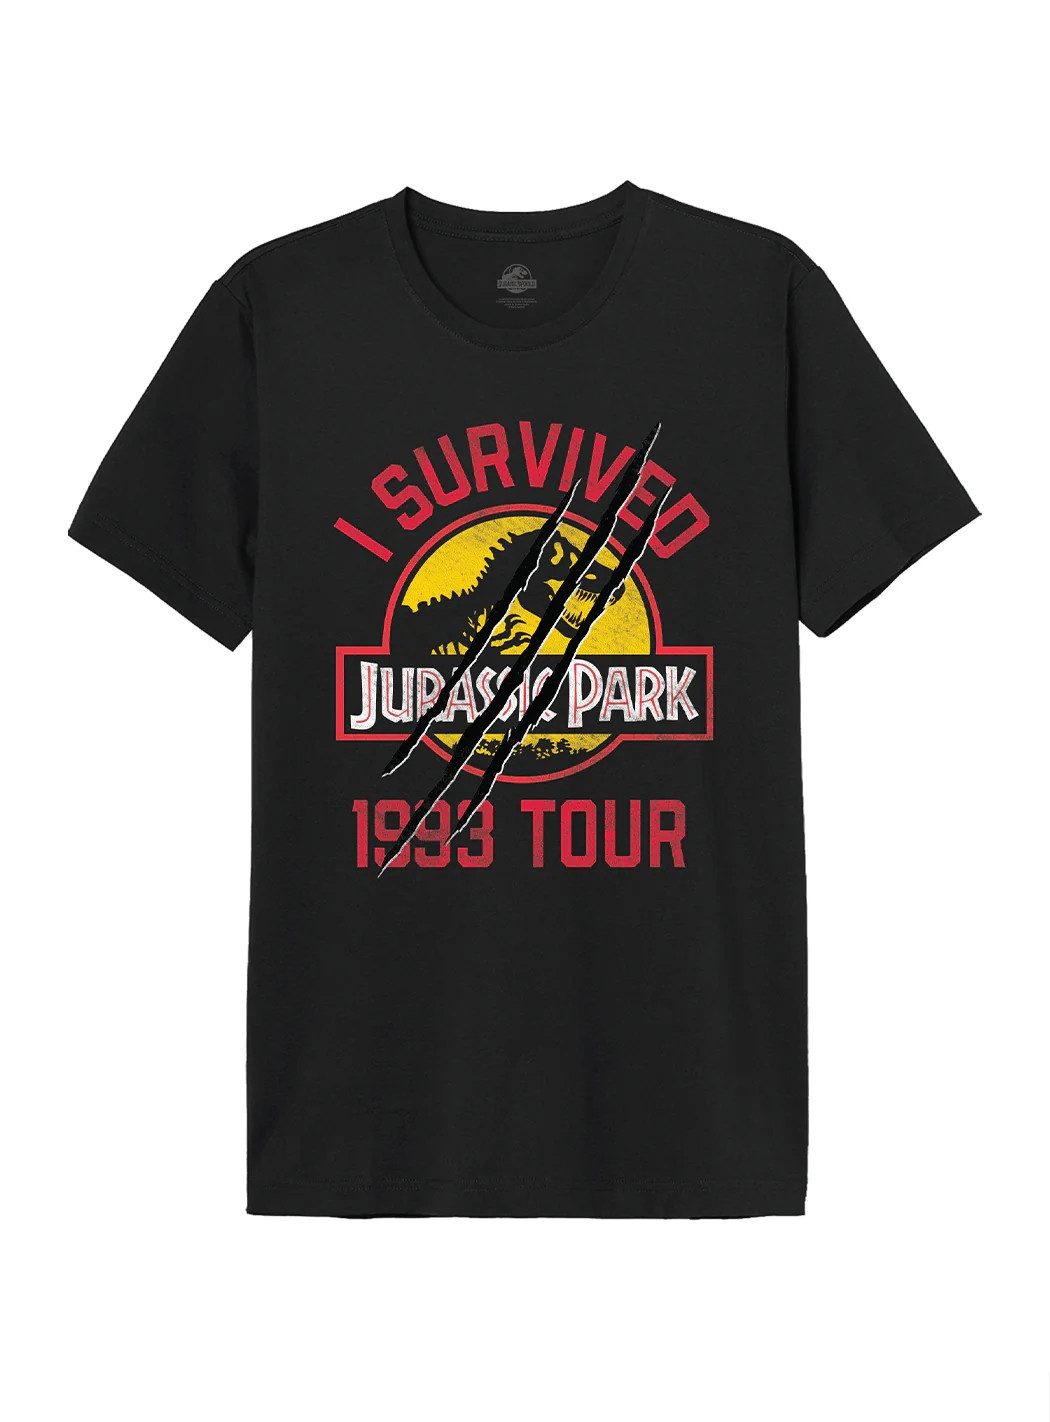 Jurassic Park T-Shirt 1993 Tour